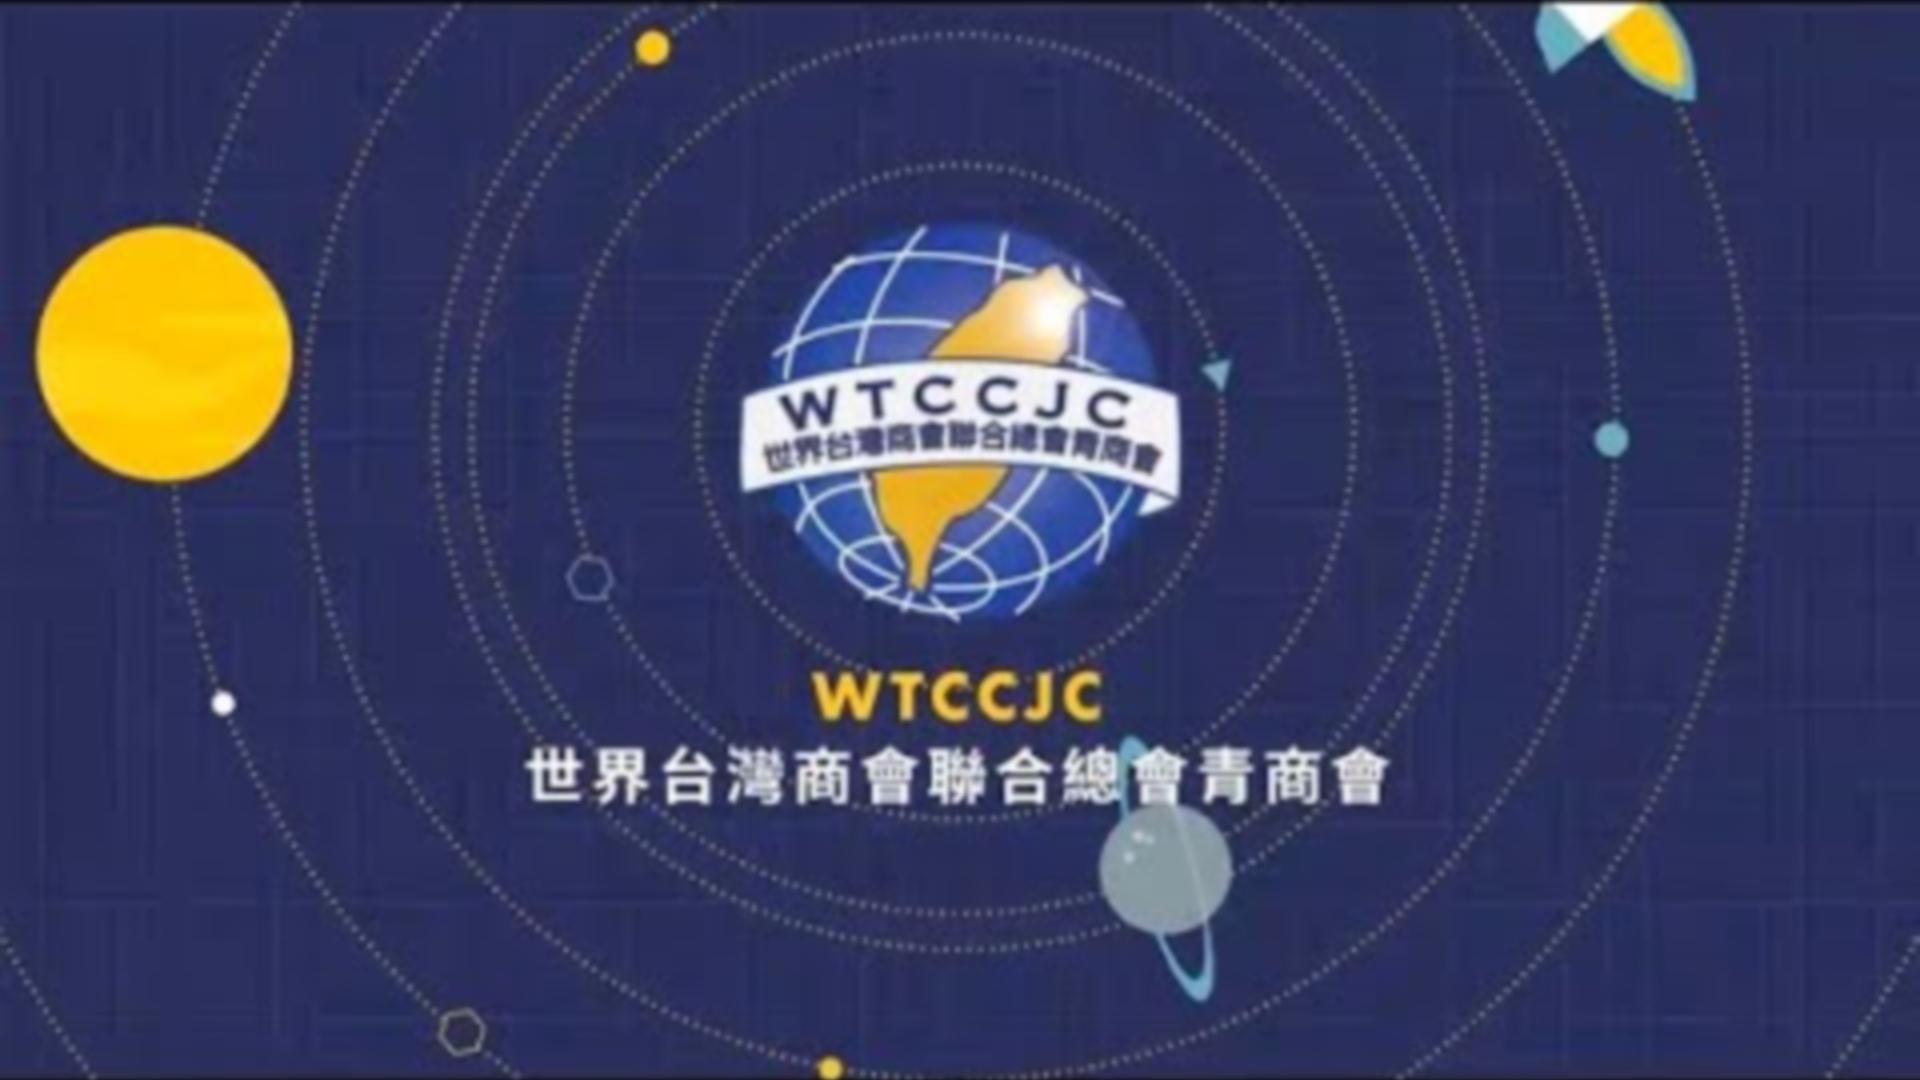 01. WTCCJC-13TH